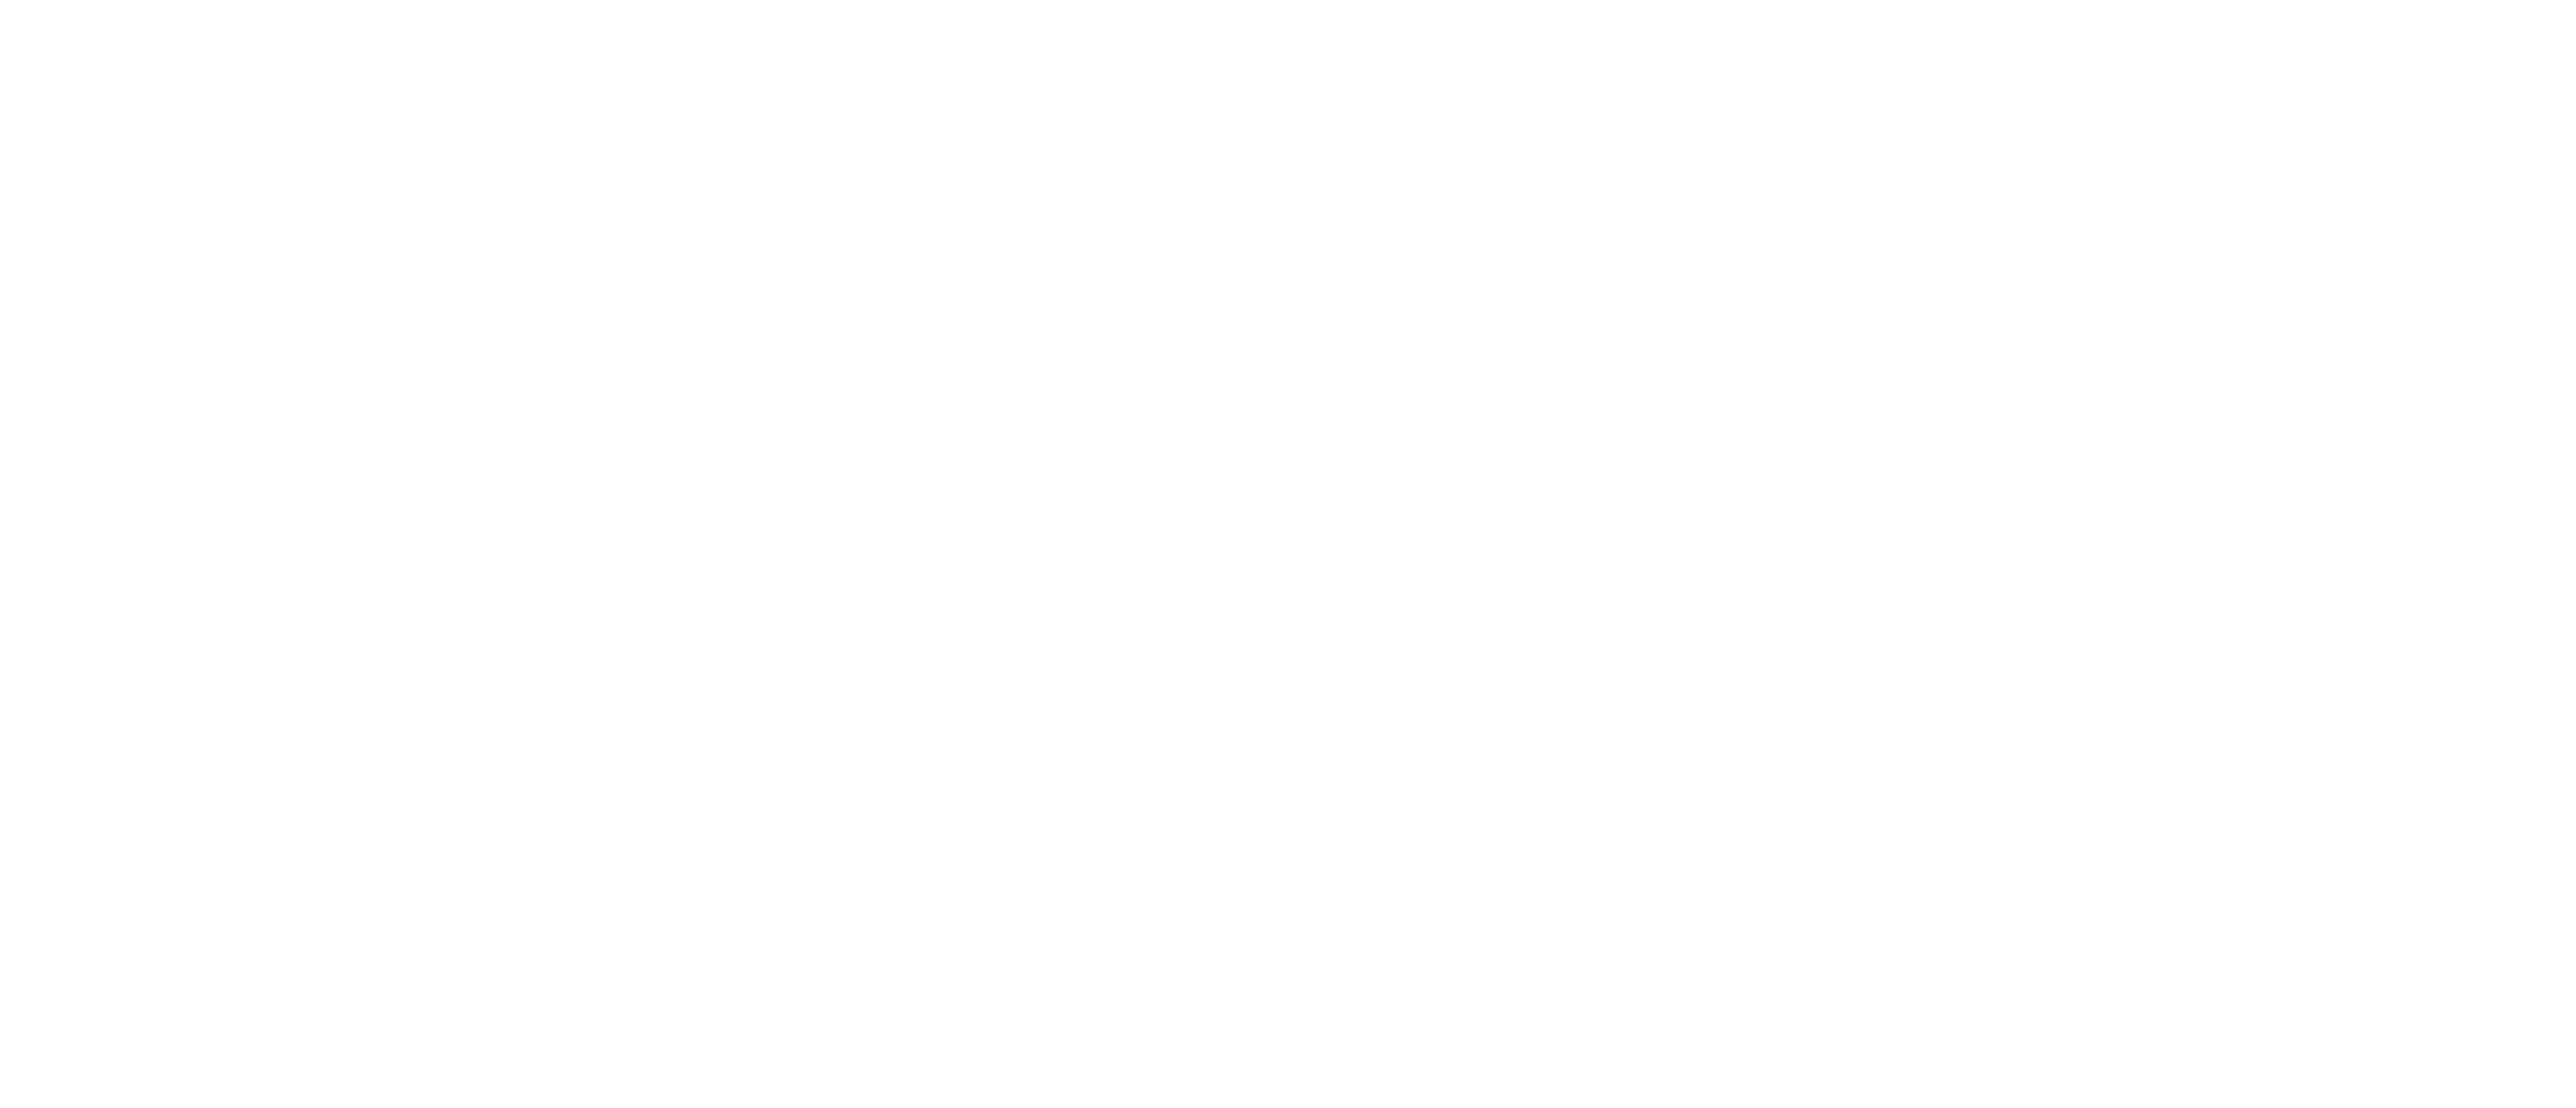 Ecosistema Ciberseguridad